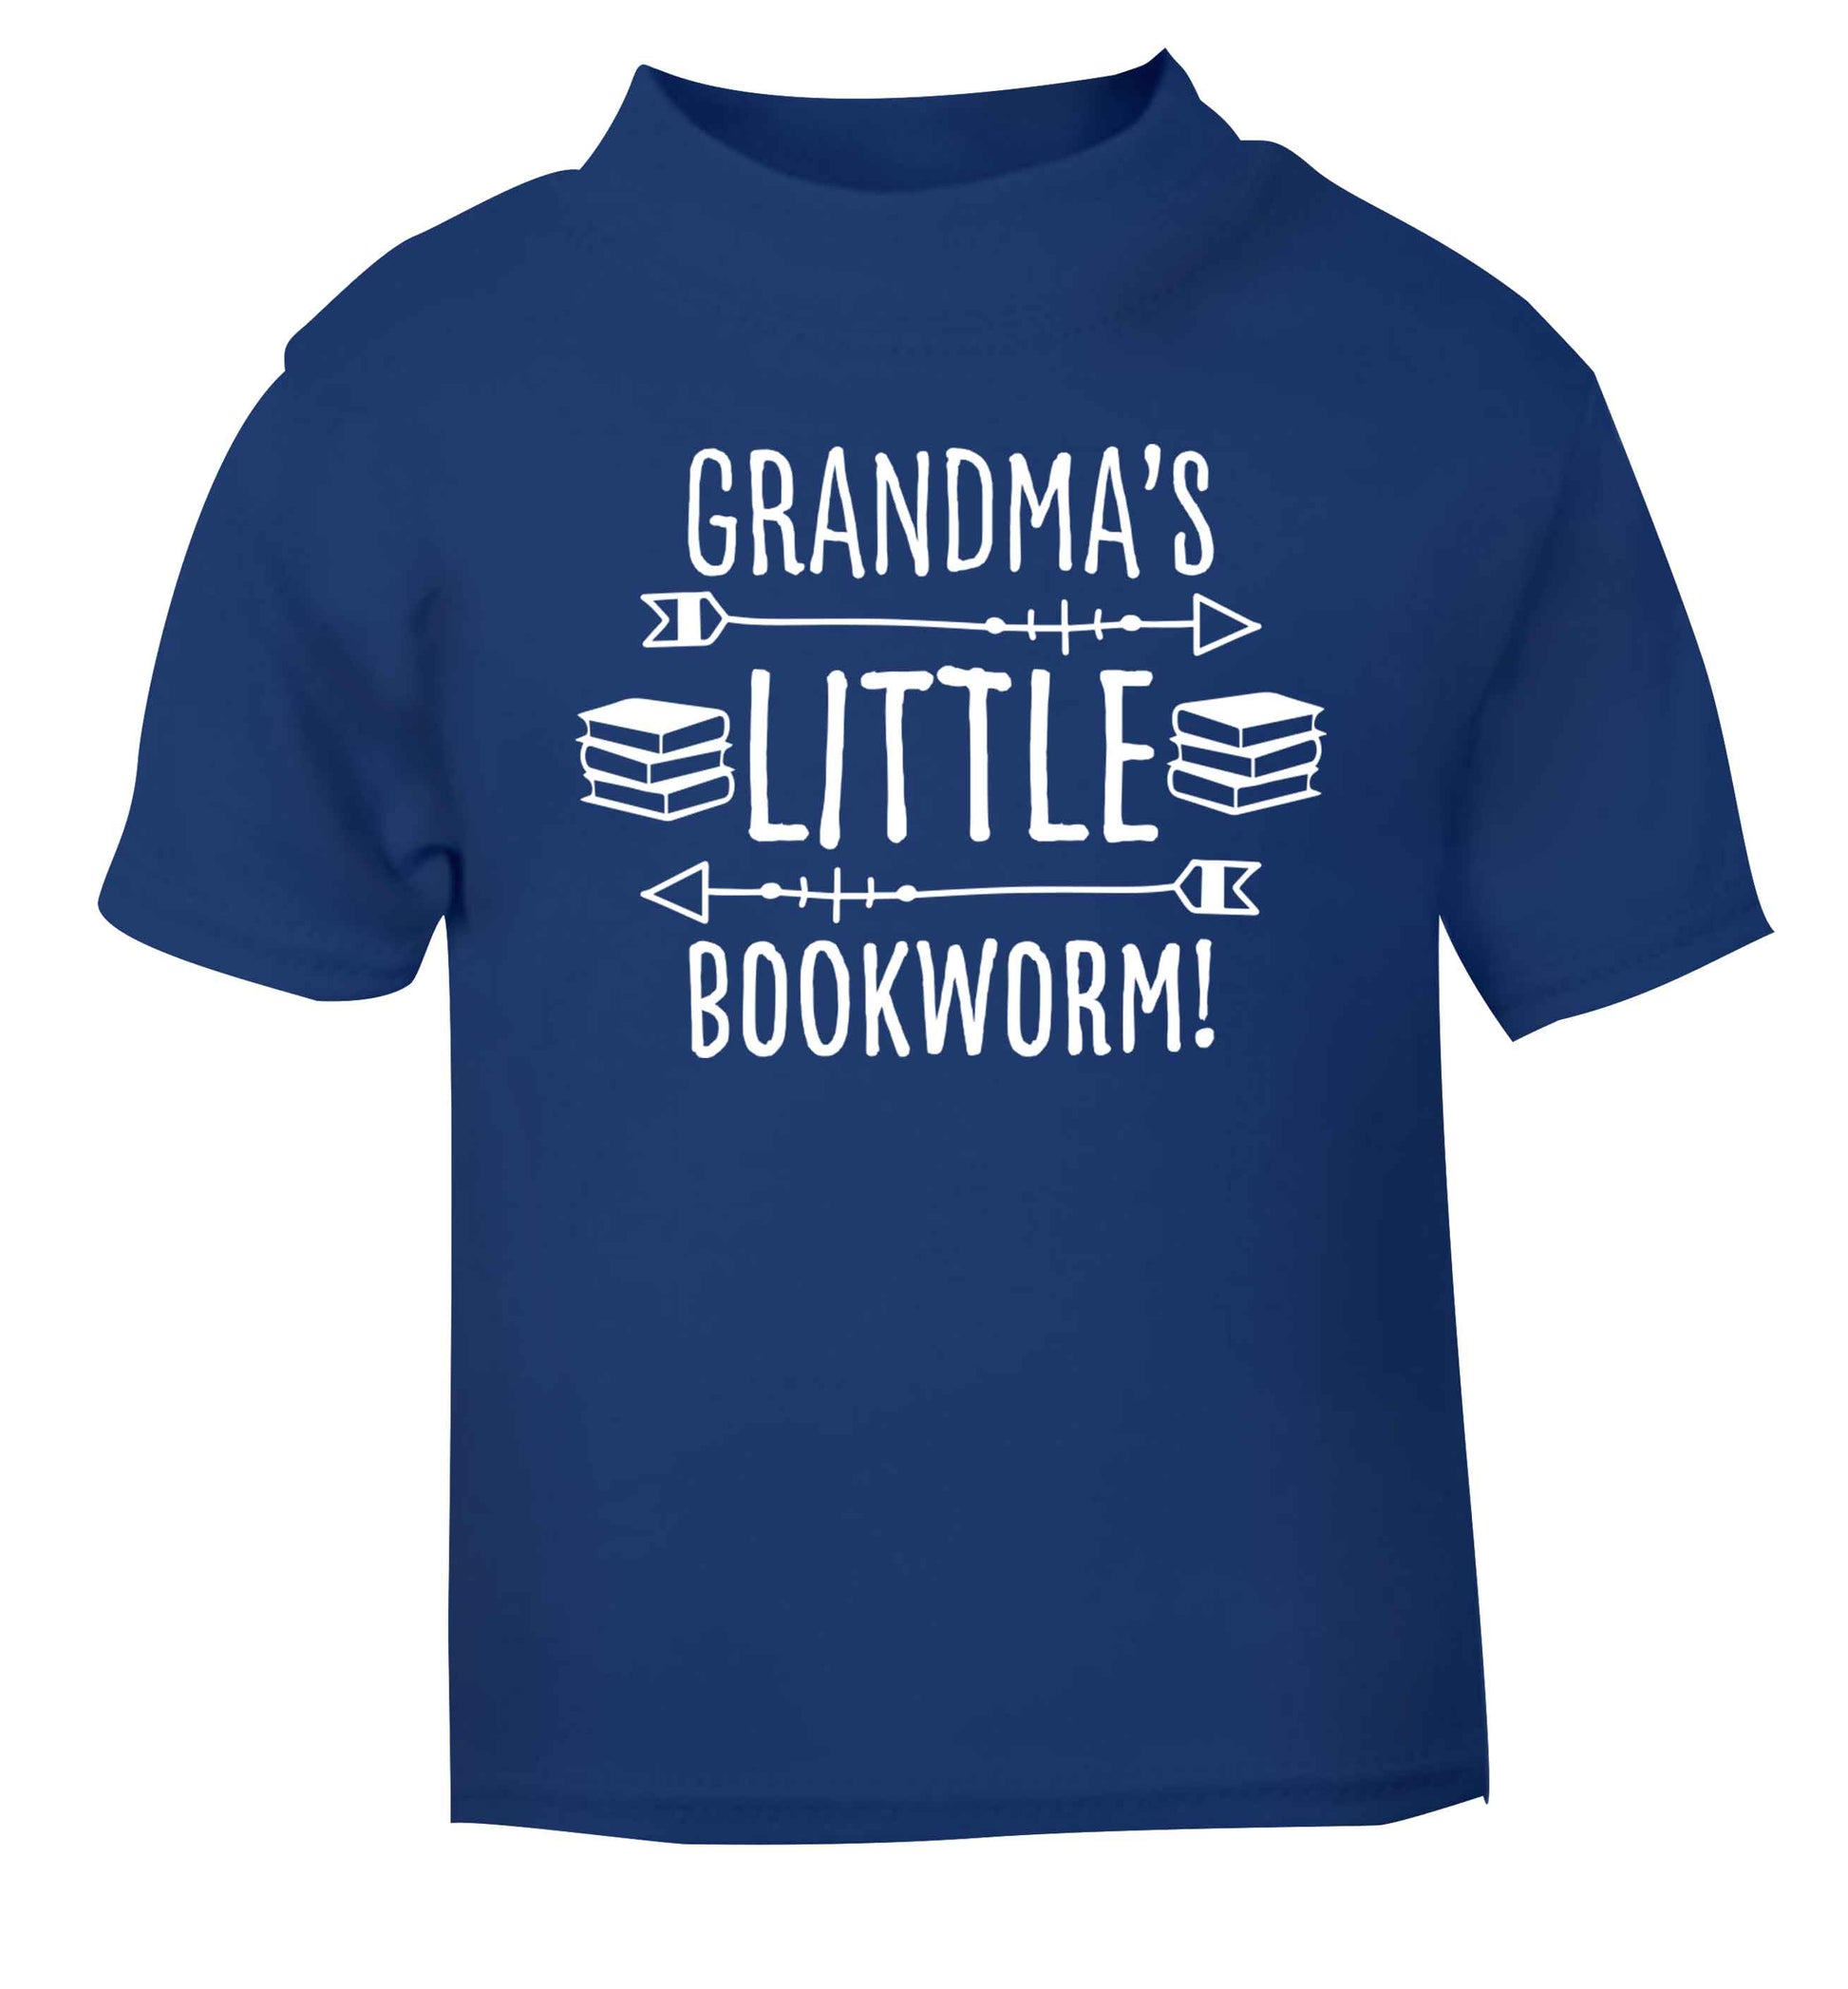 Grandma's little bookworm blue baby toddler Tshirt 2 Years